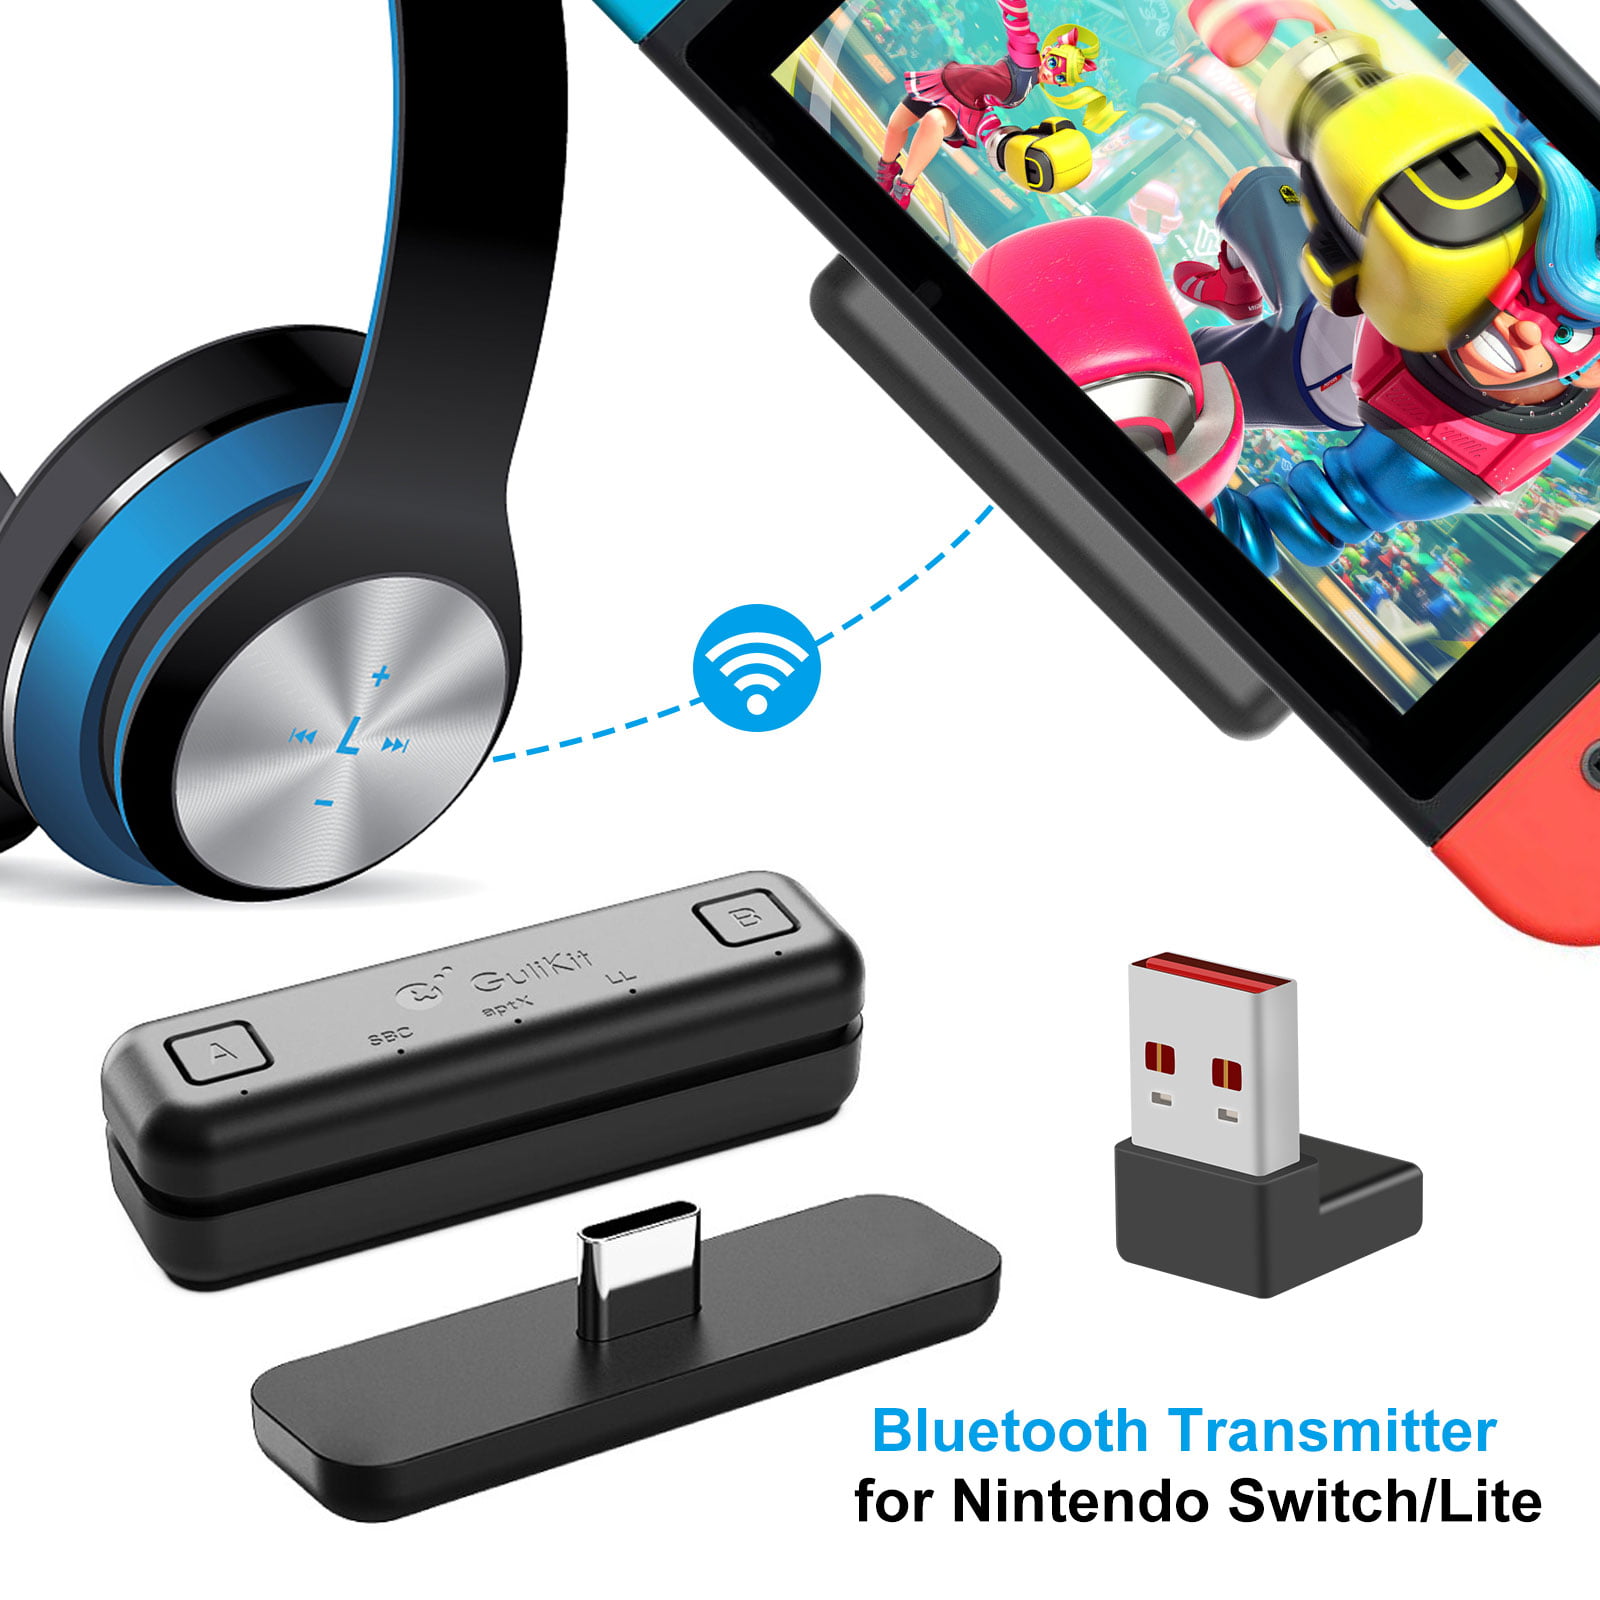 Nintendo Switch Lite Usb Adapter Deals, 60% OFF | www.emanagreen.com